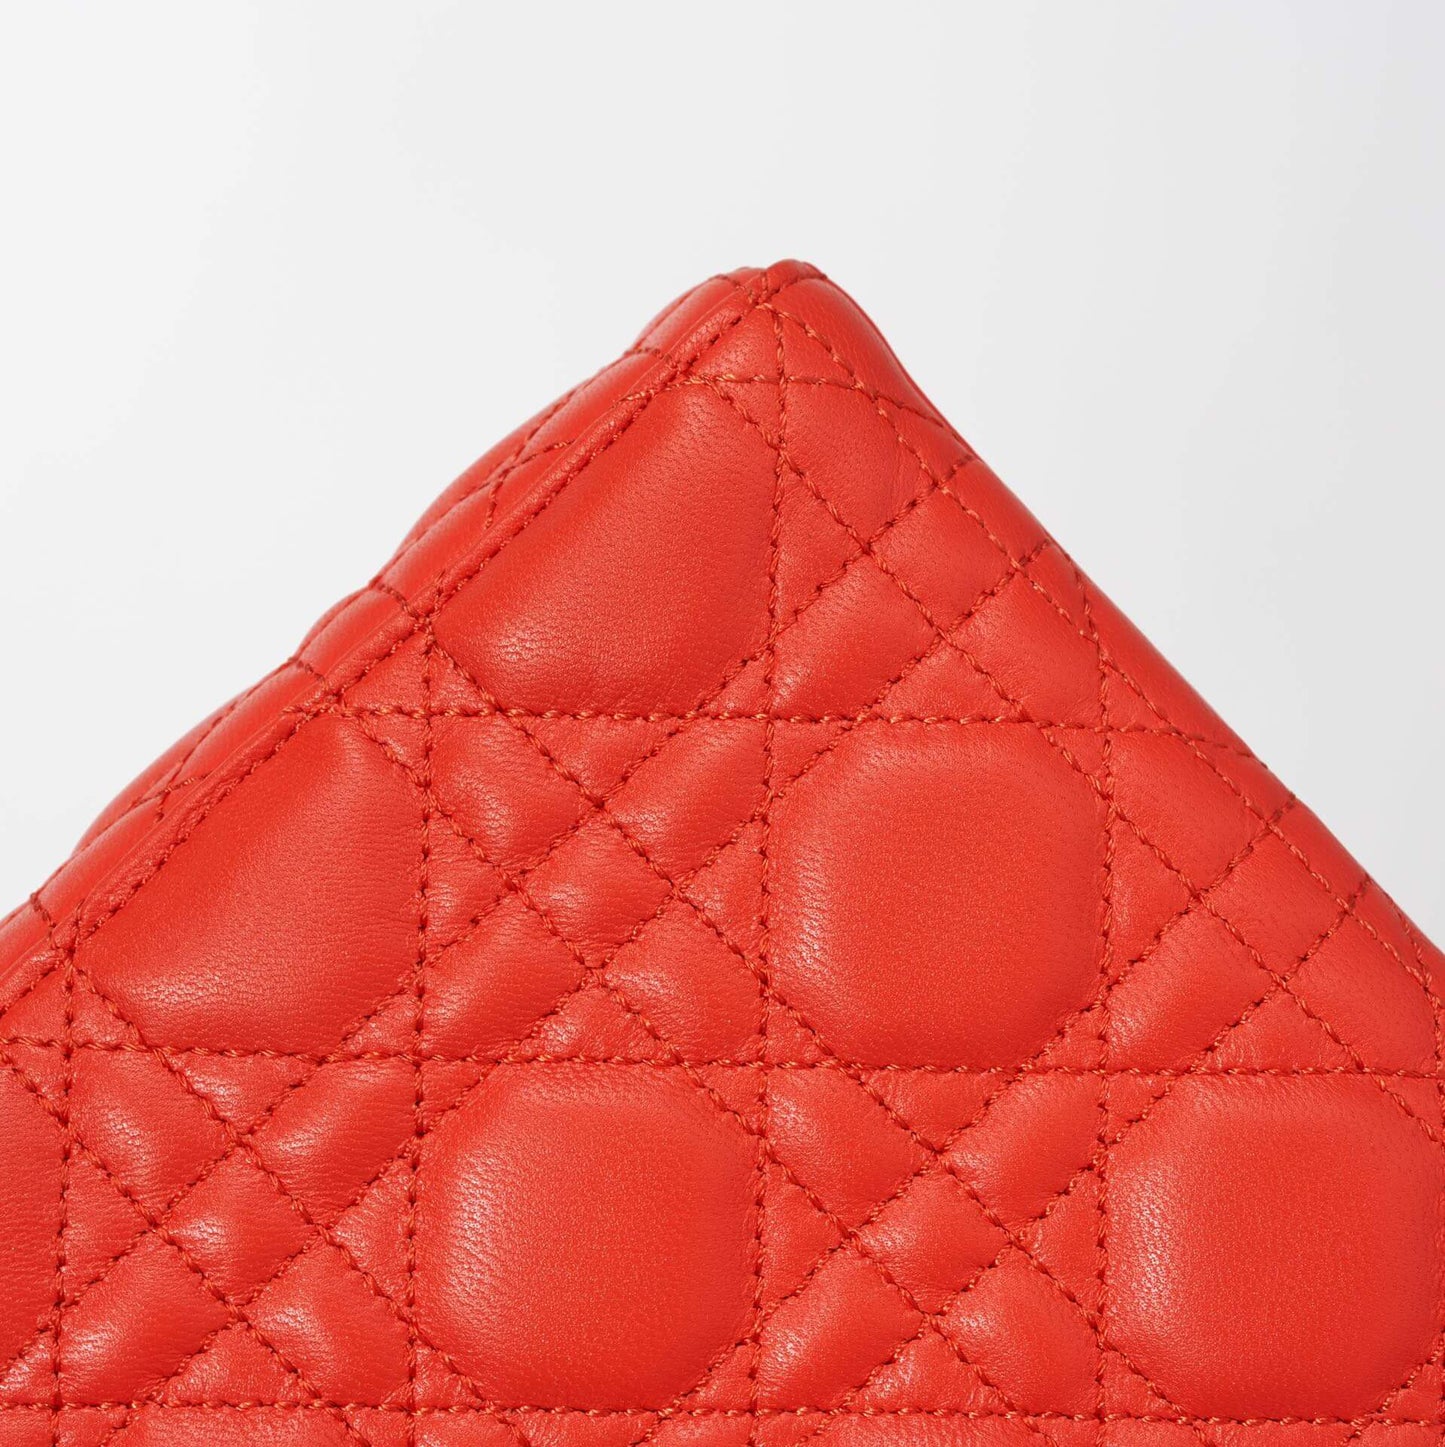 DO 8015 Lady D-Joy Handbag red 26cm